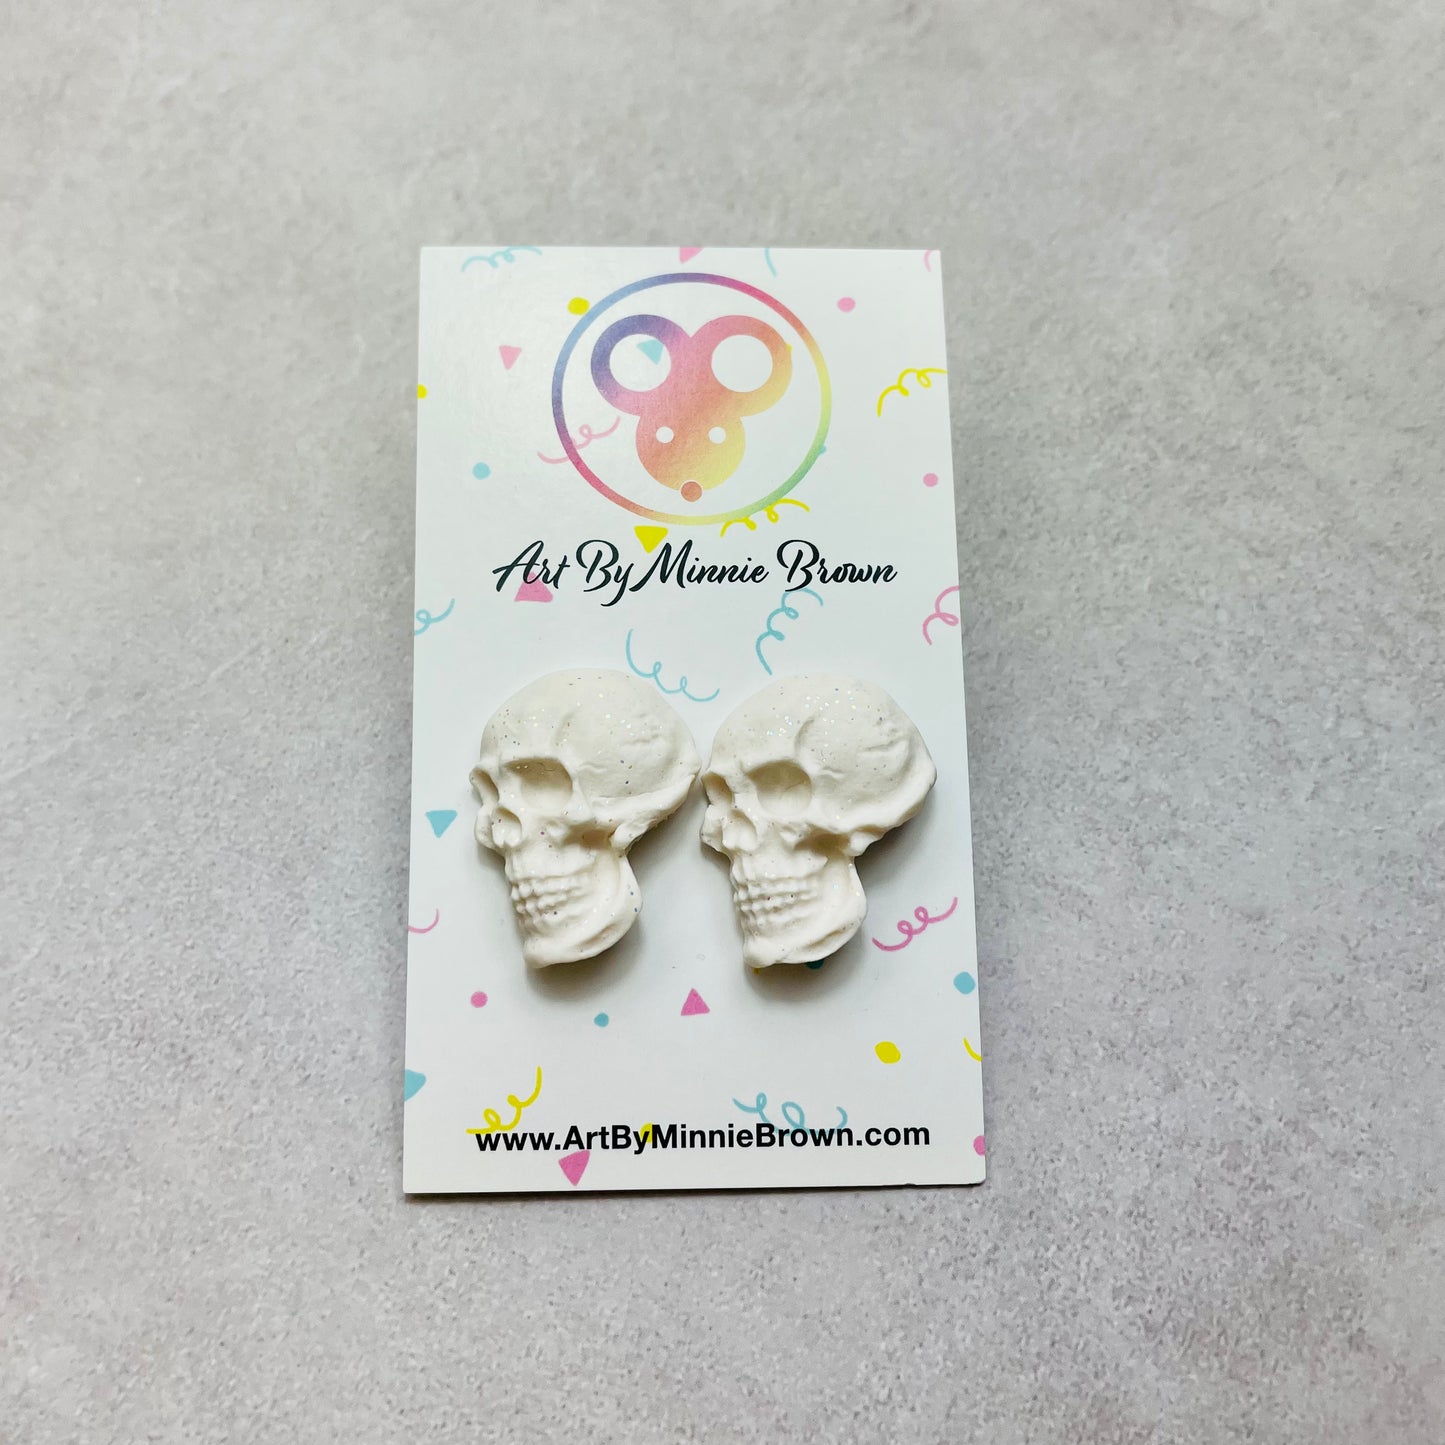 XXL Glitter White Skull Stud Earrings - The perfect accessory for Halloween.